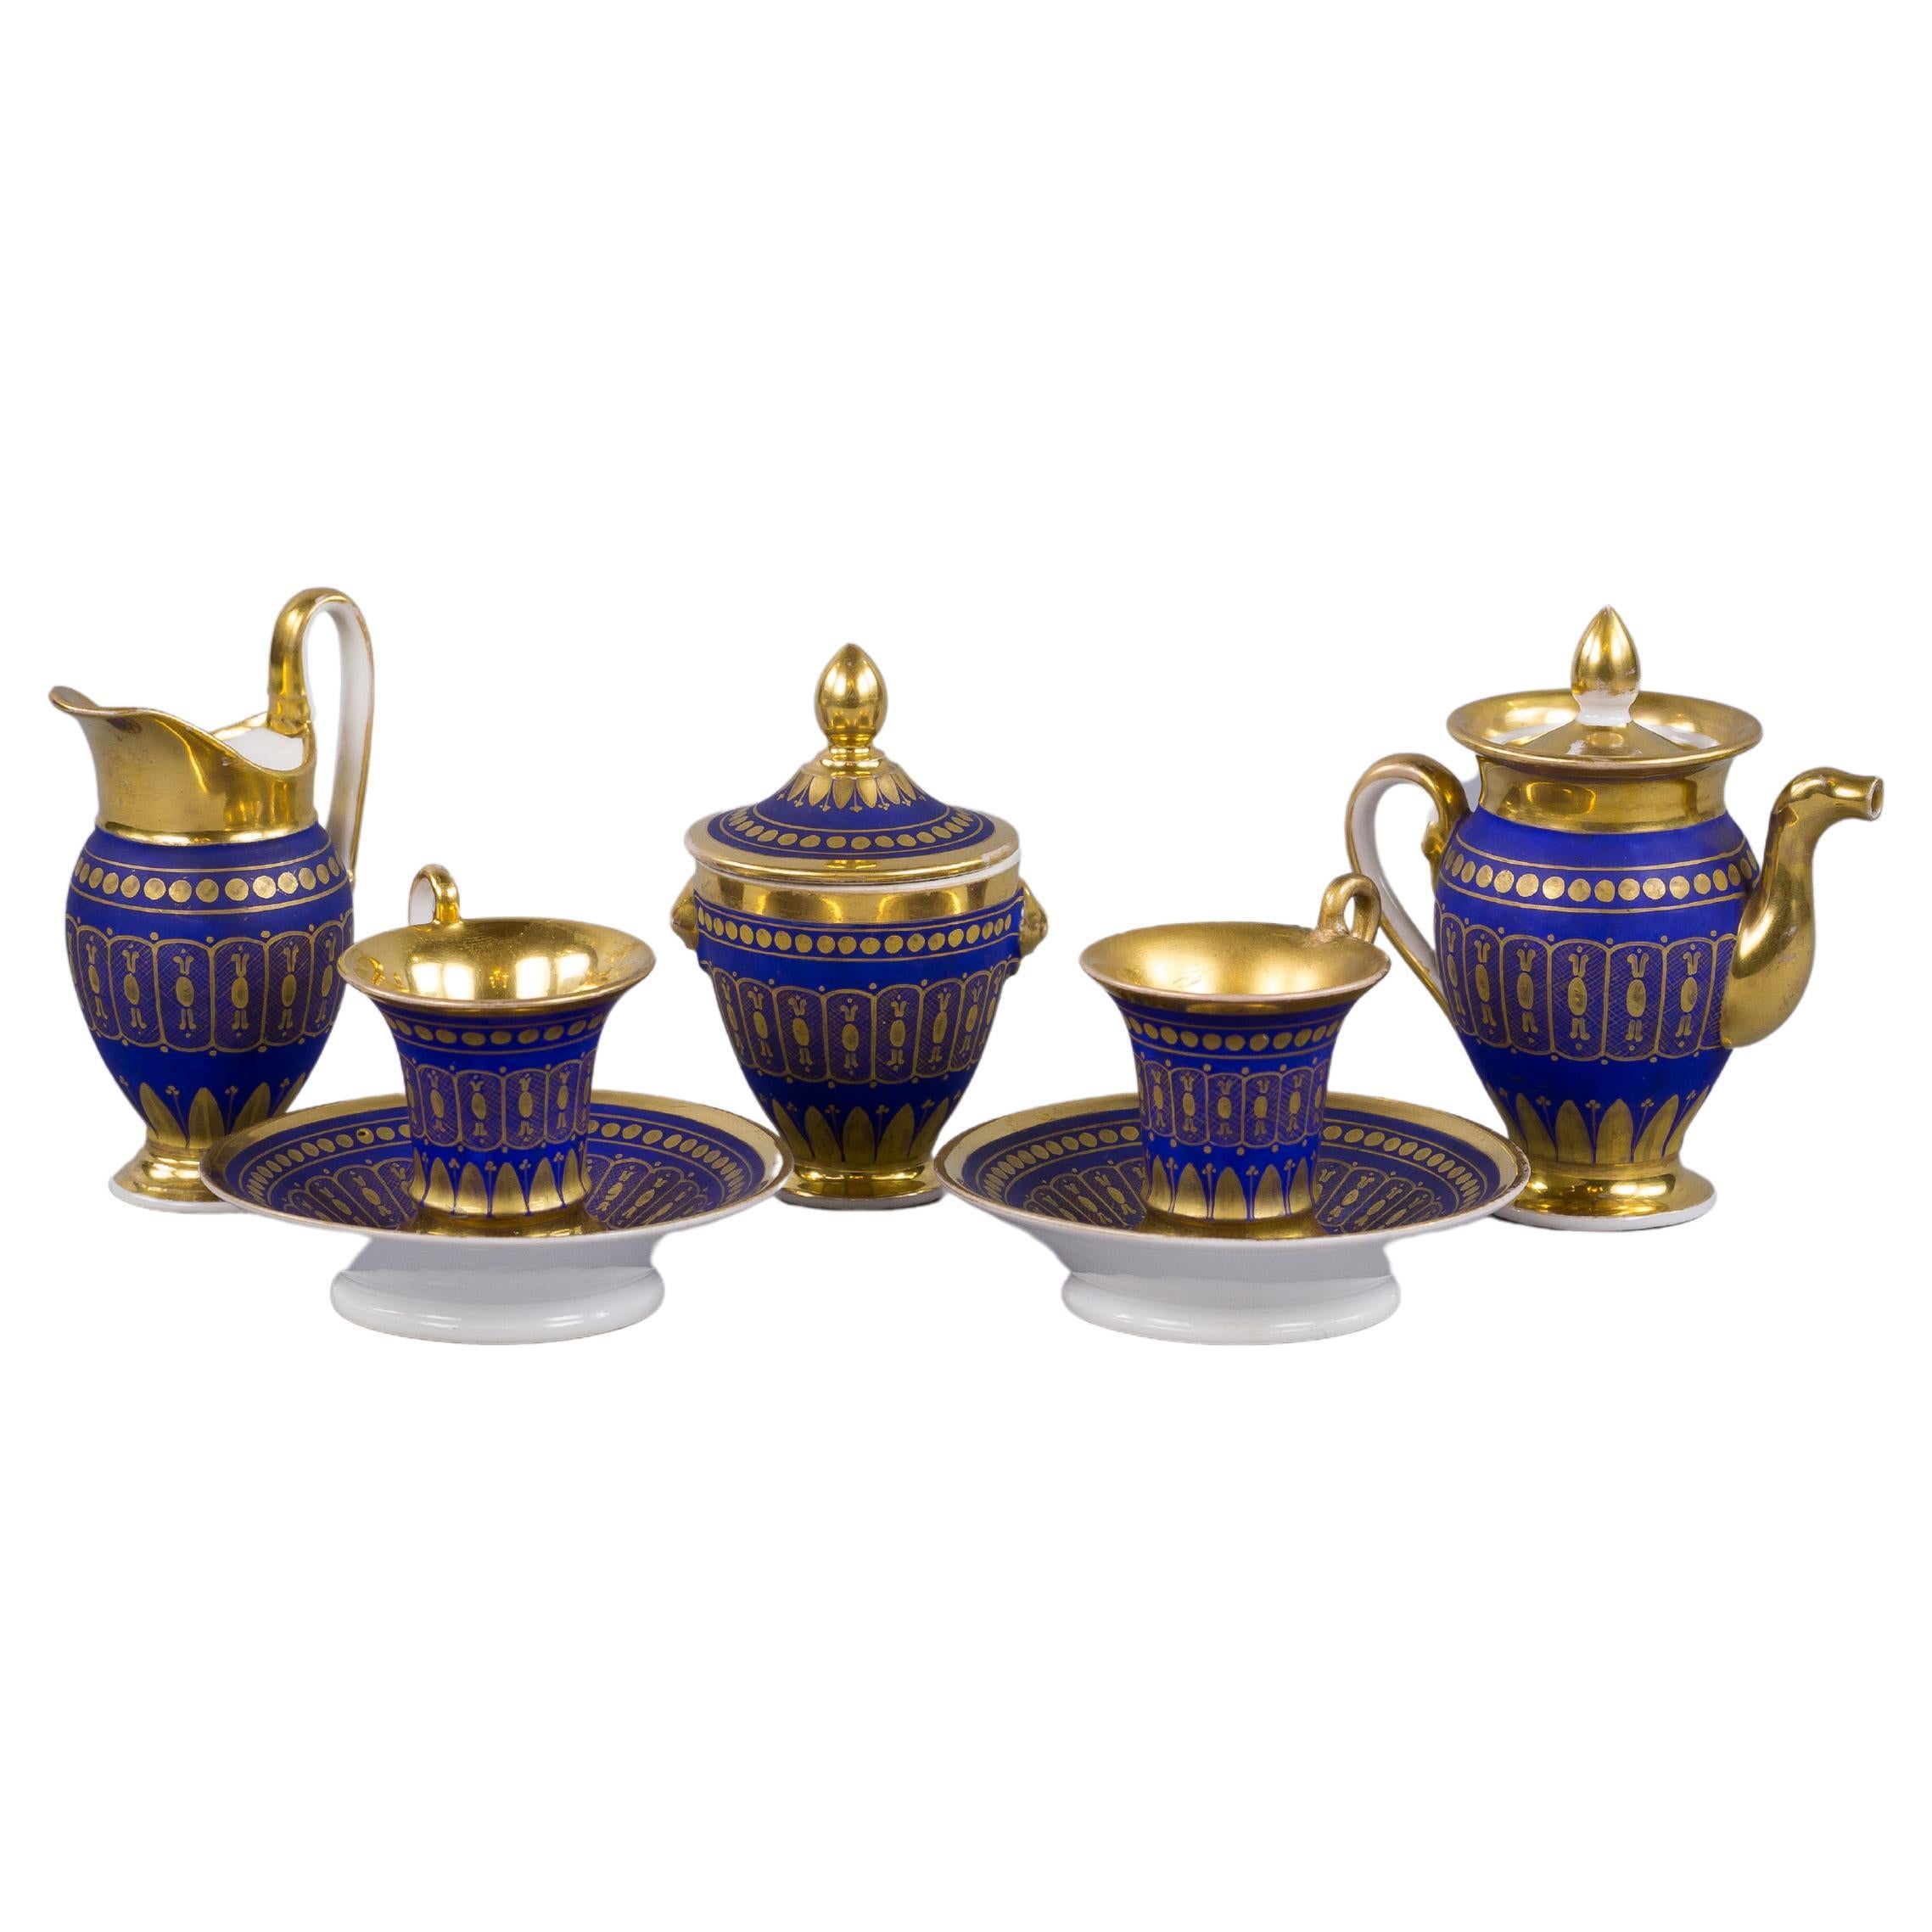 Five-Piece Paris Porcelain Miniature Tea Set, circa 1820